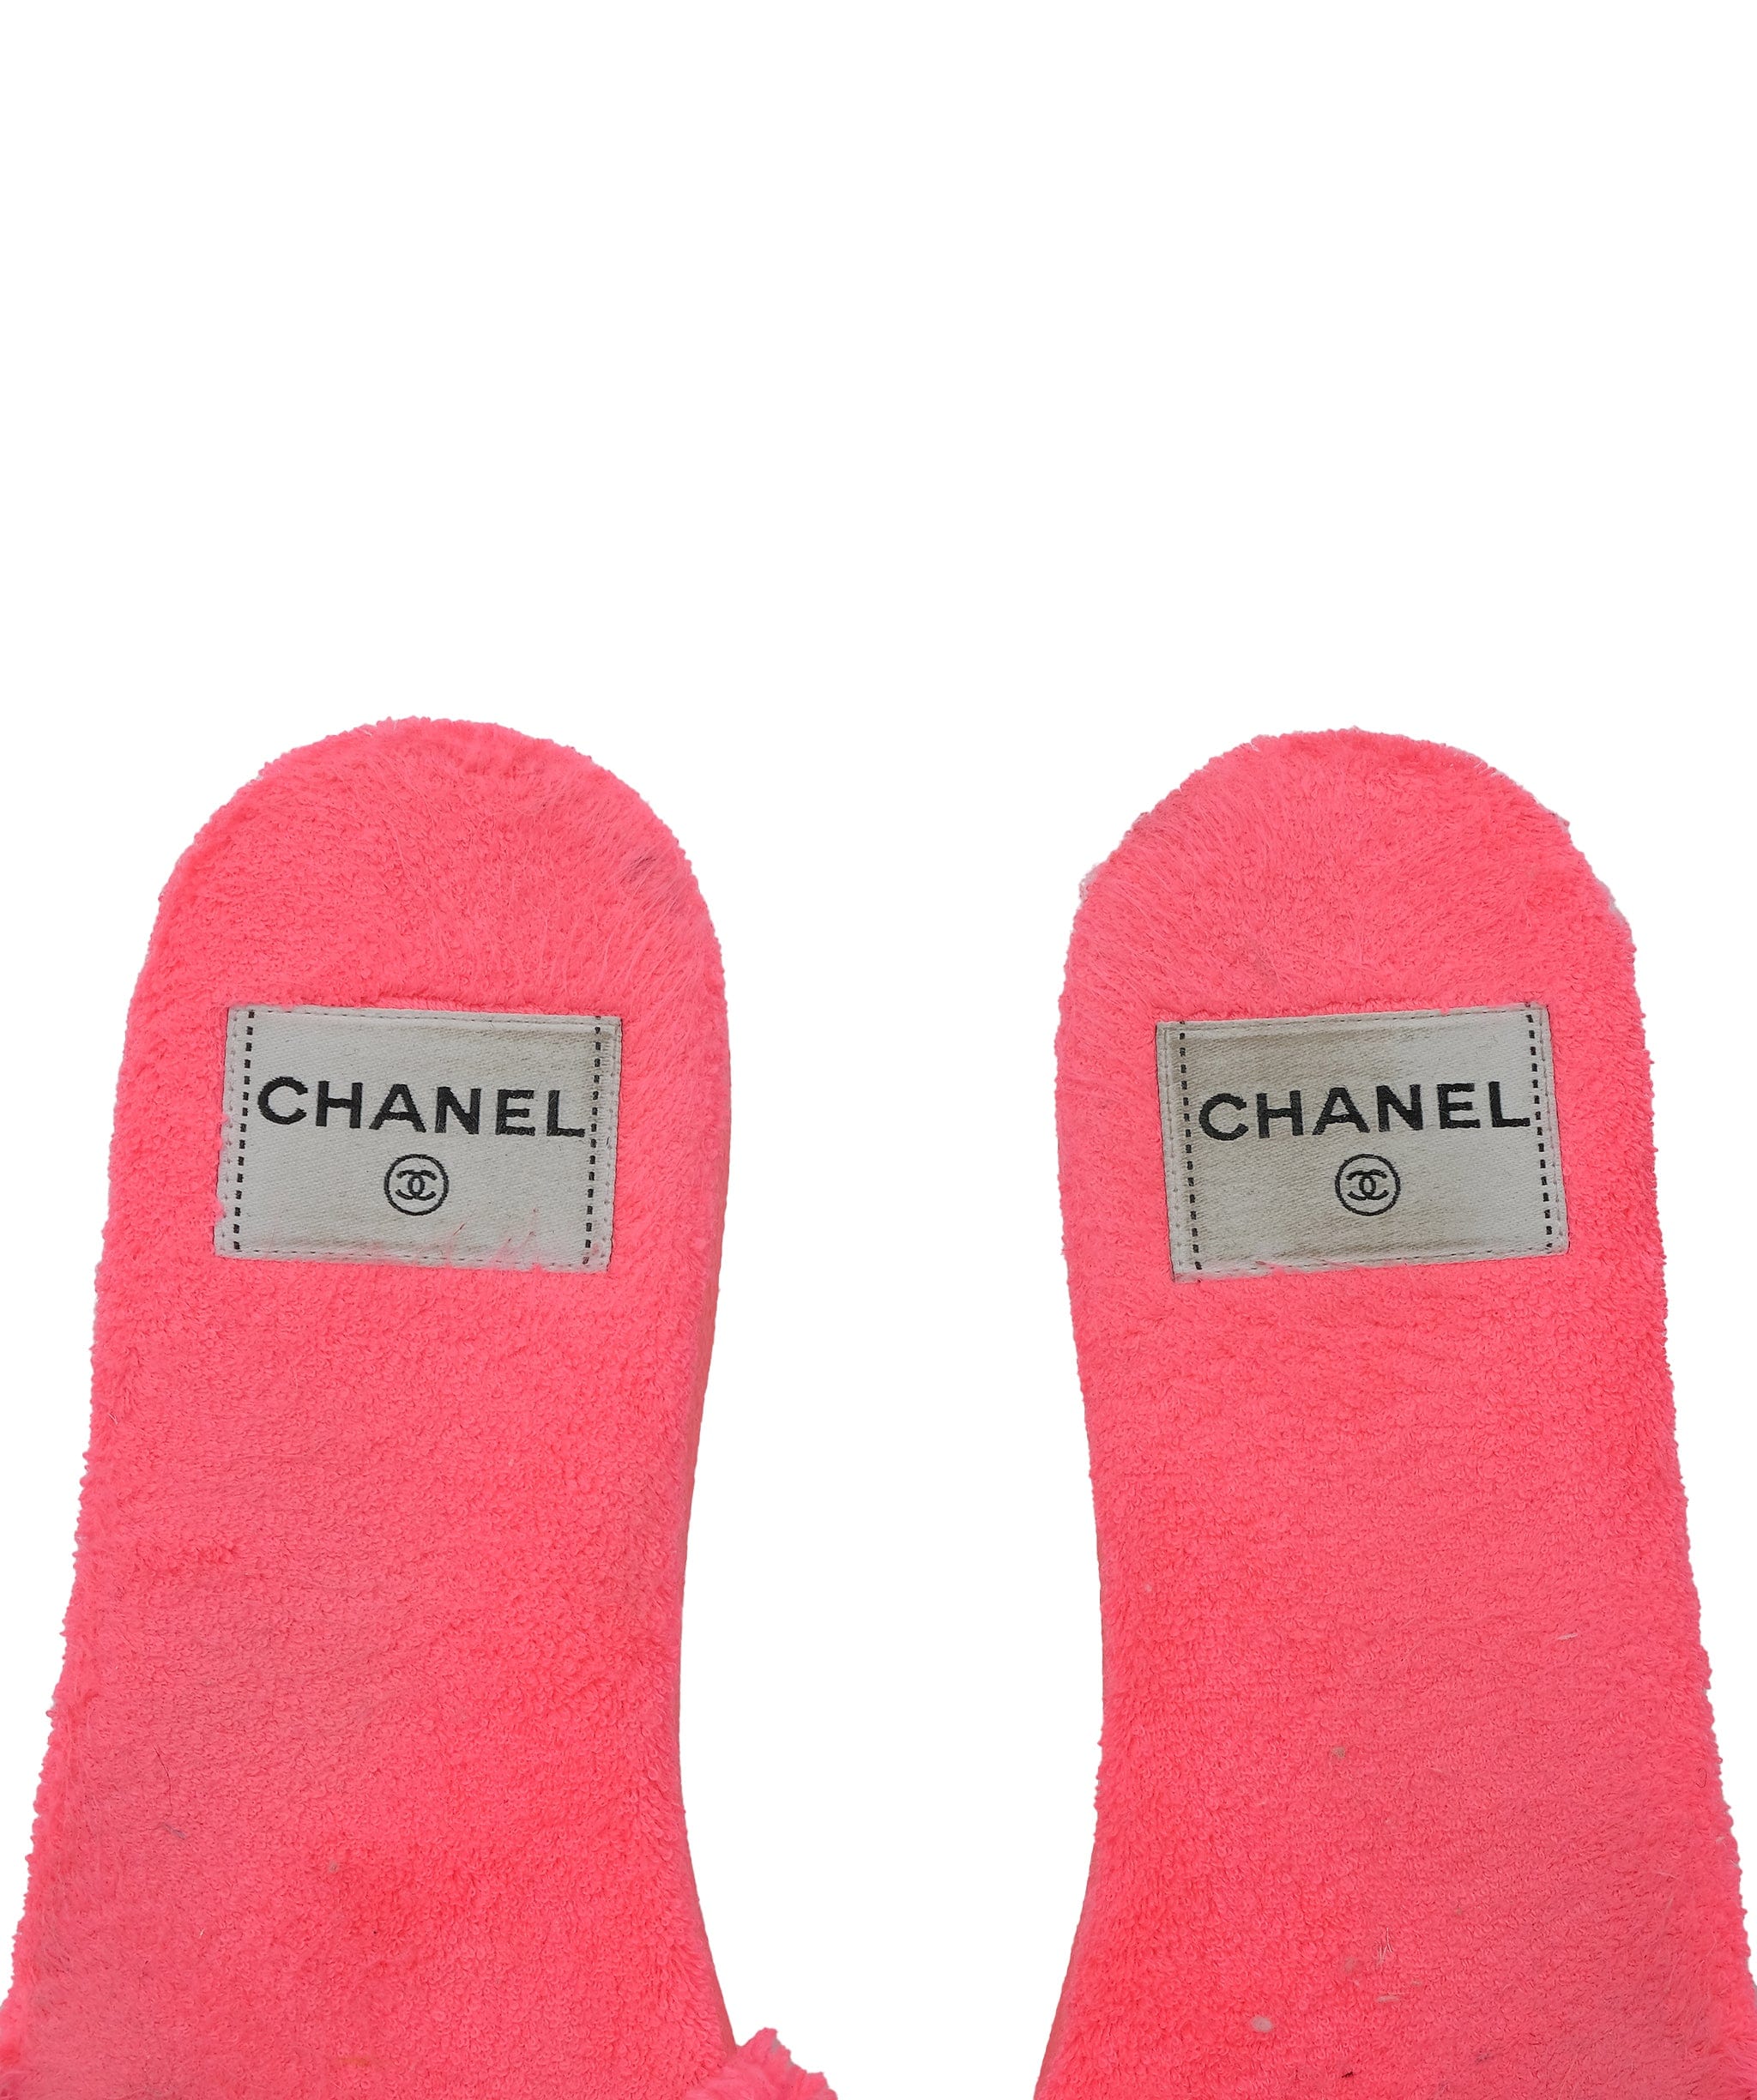 Chanel Chanel Slides Pink Size 40C RJC2890